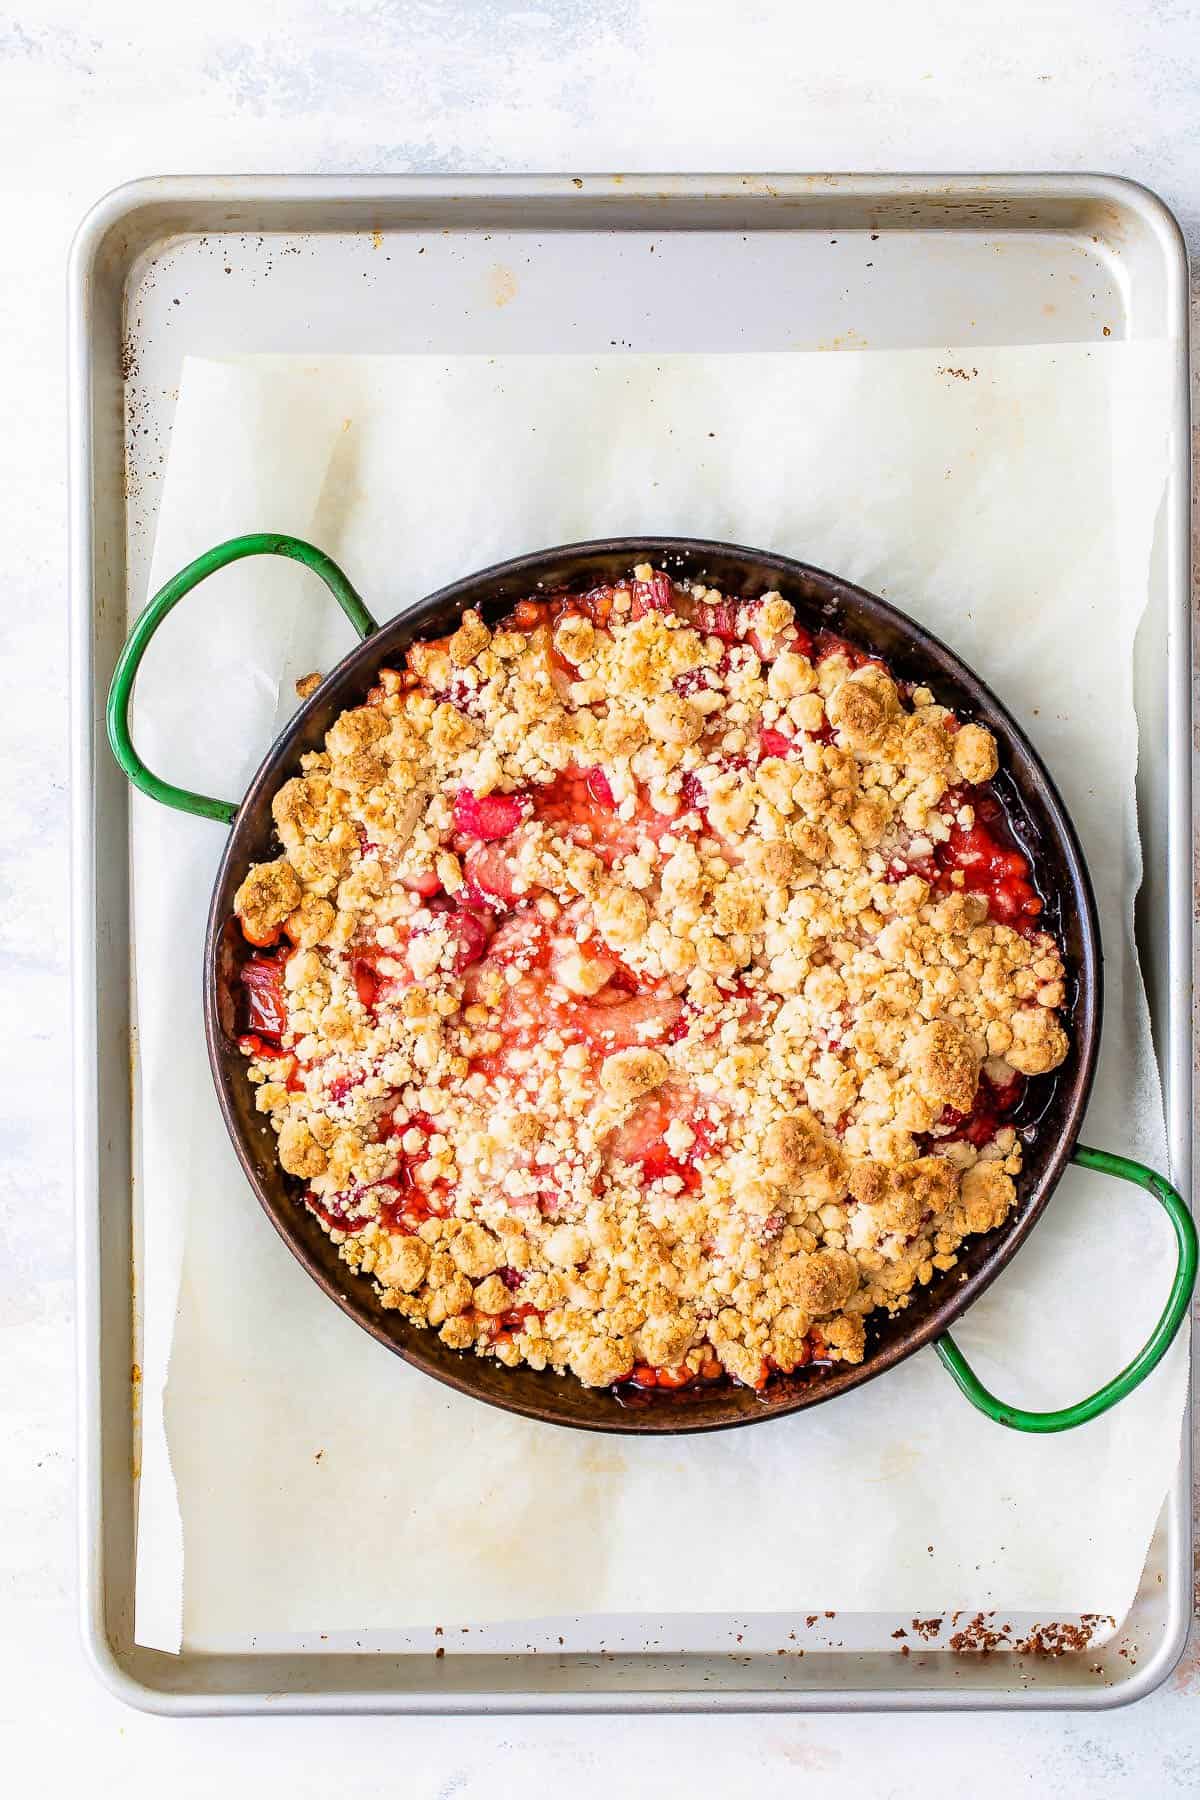 Pan full of strawberry rhubarb crumble.